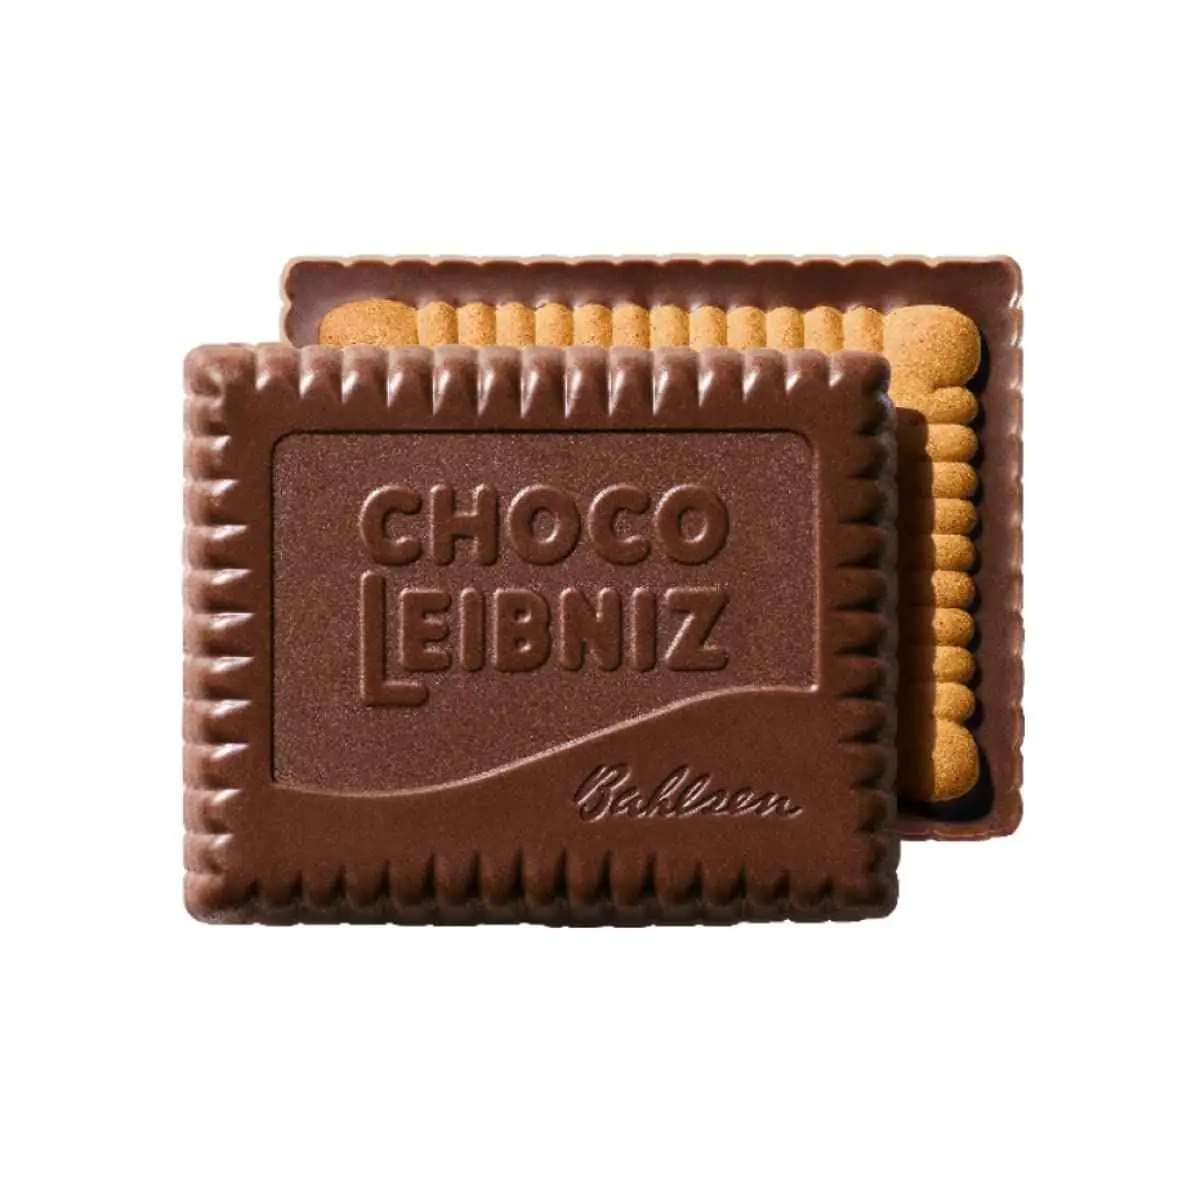 Choco Leibniz Dark Chocolate Delivery